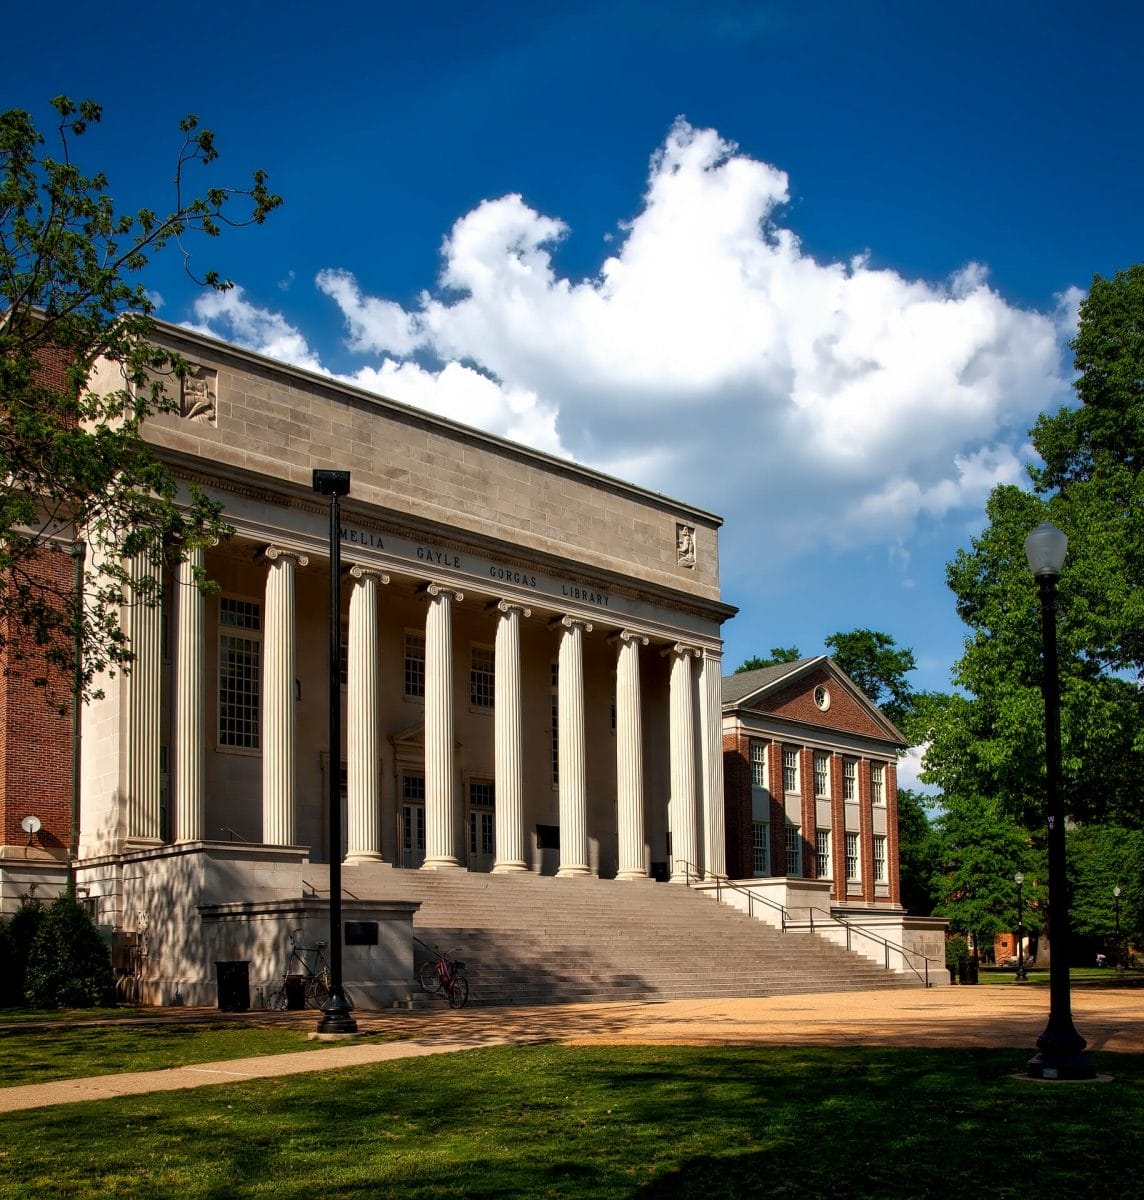 Building with tall columns at University of Alabama Tuscaloosa